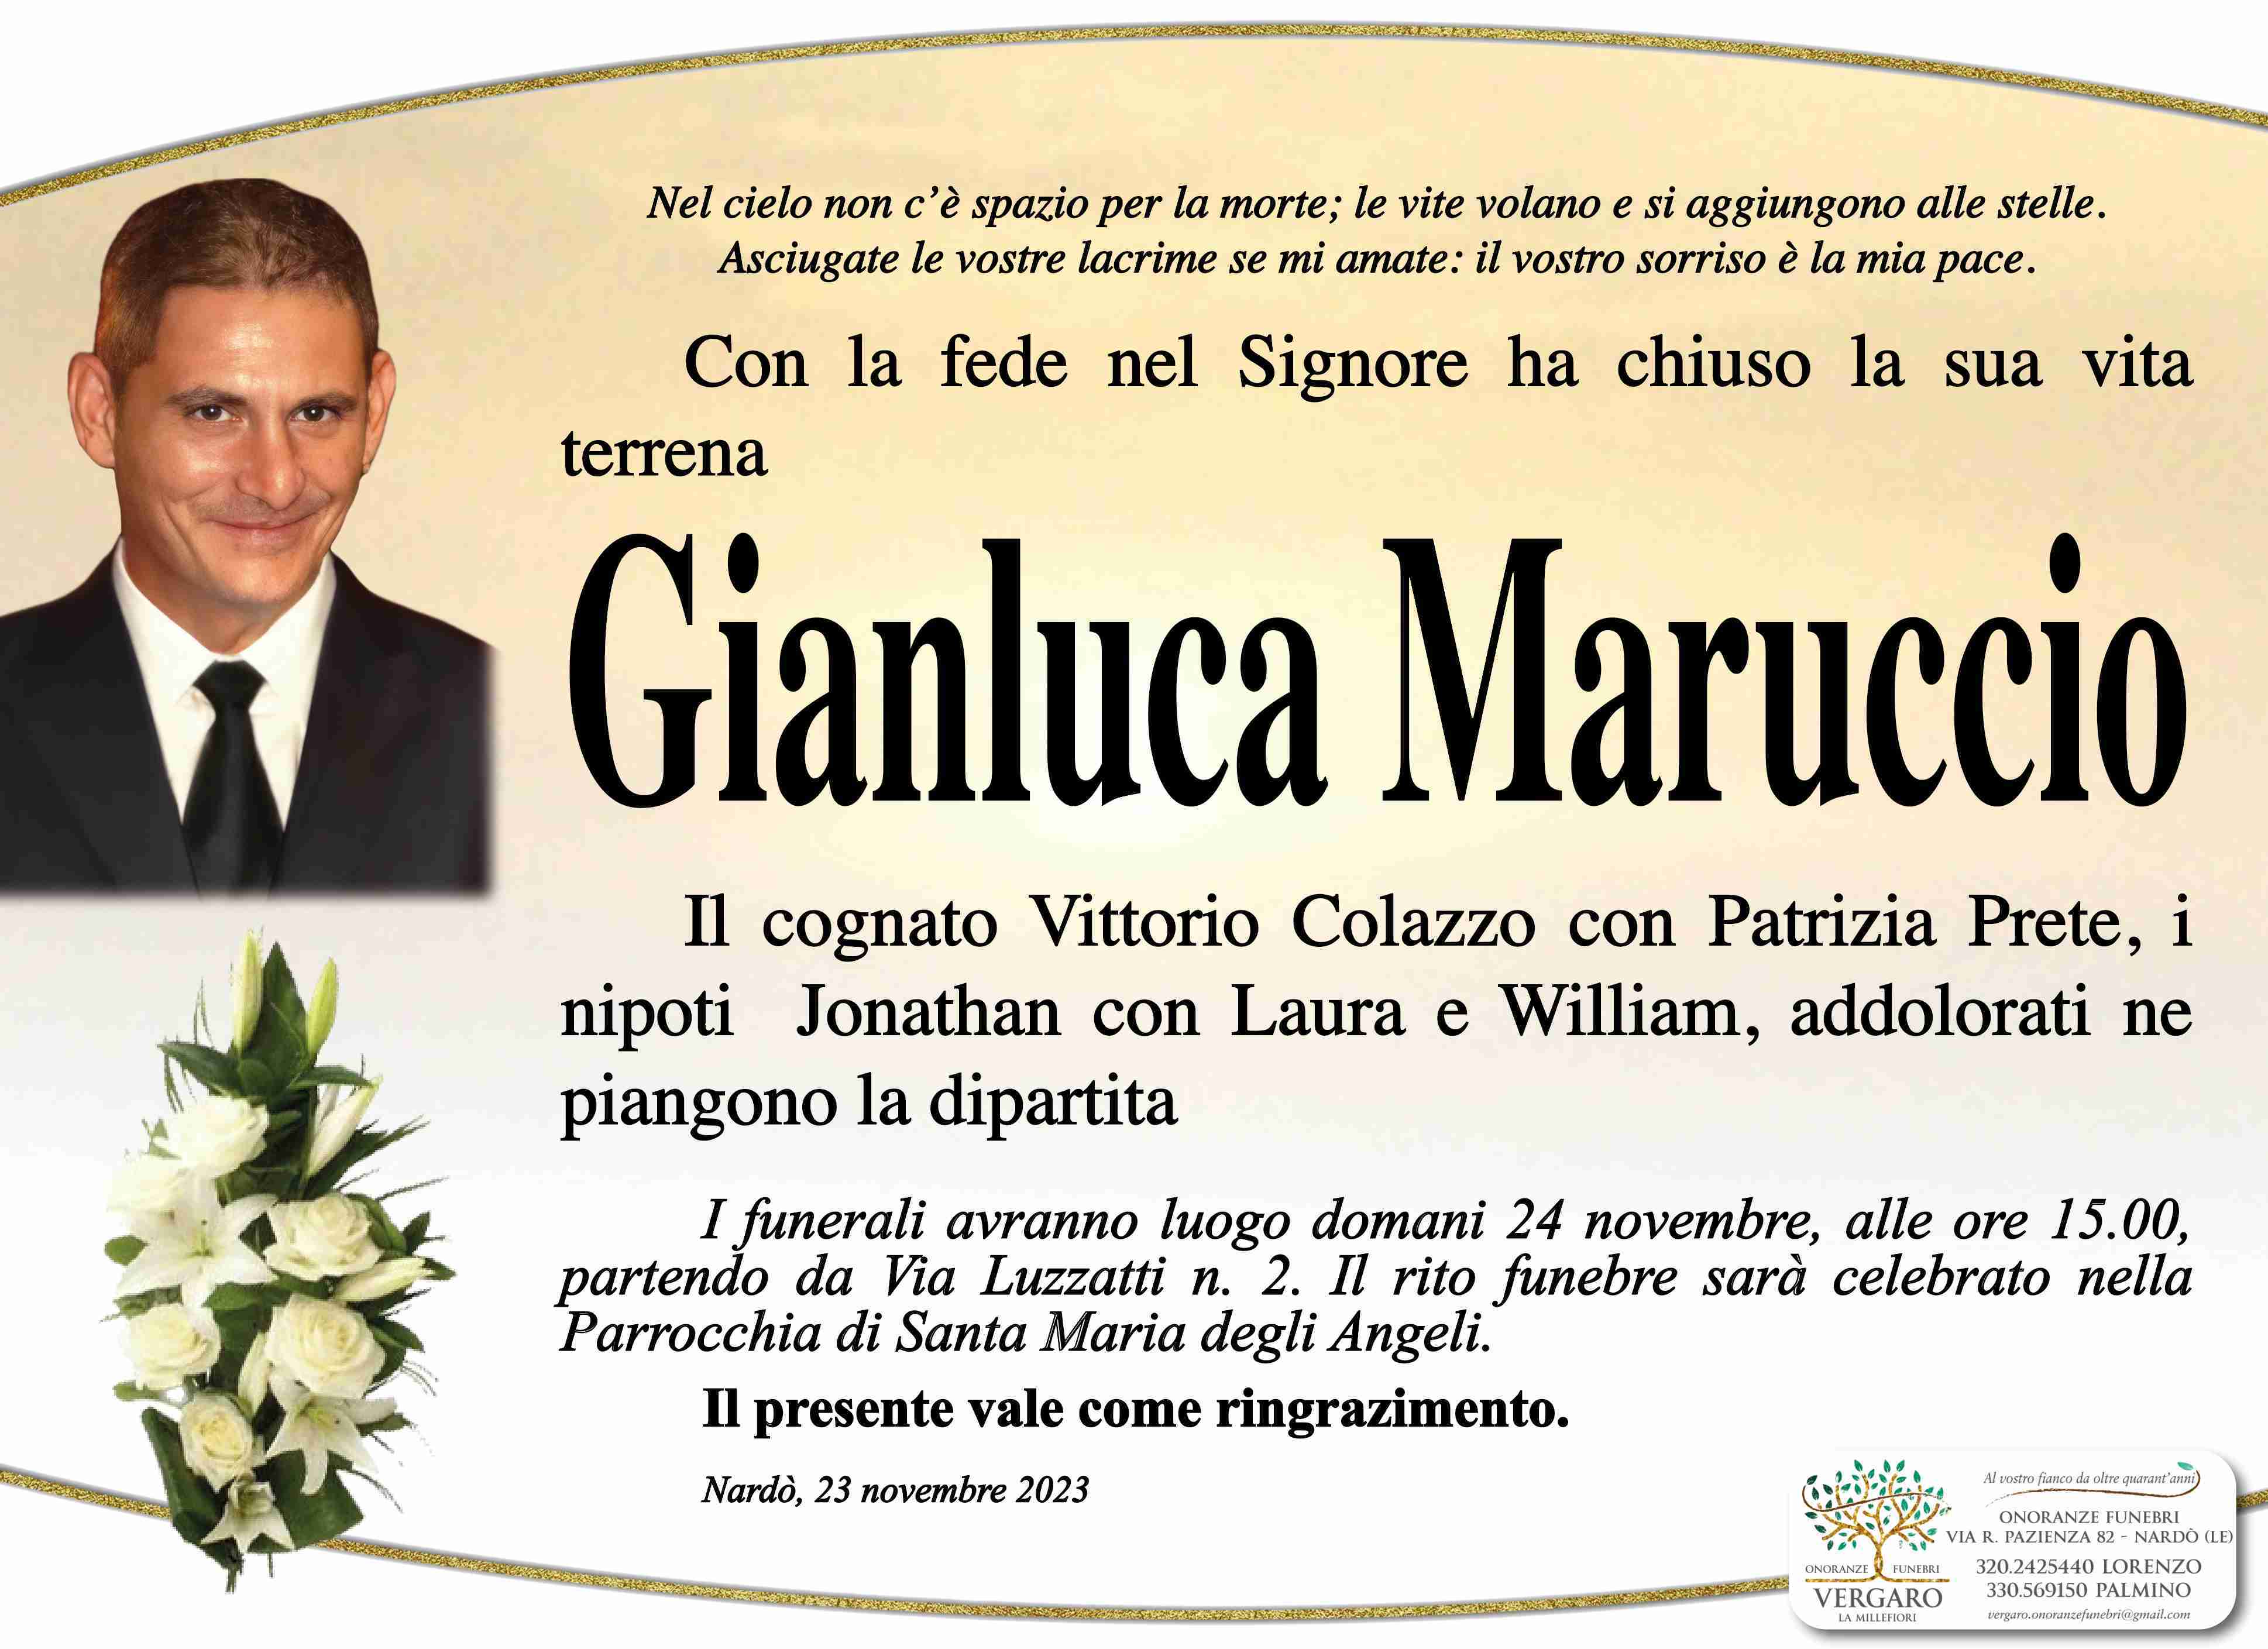 Gianluca Maruccio